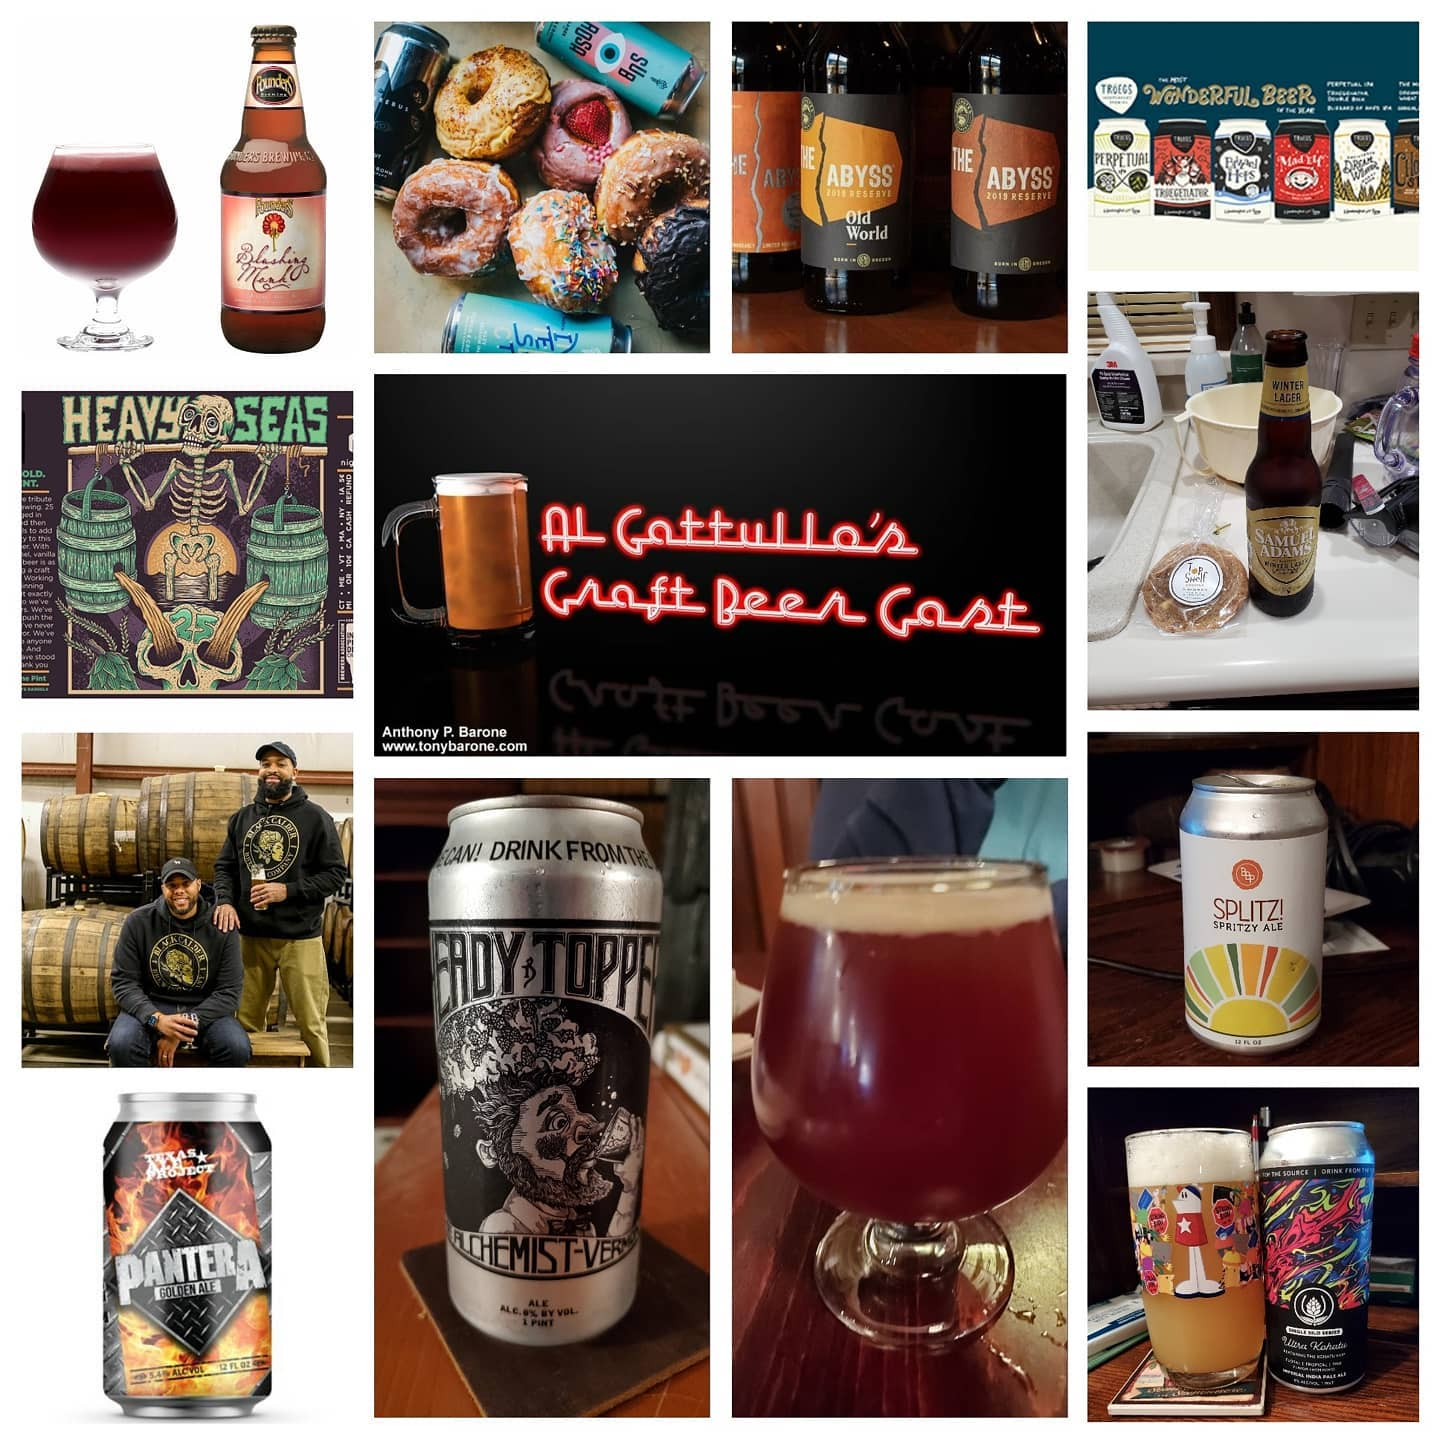 AG Craft Beer Cast 11-29-20 News Filled Edition